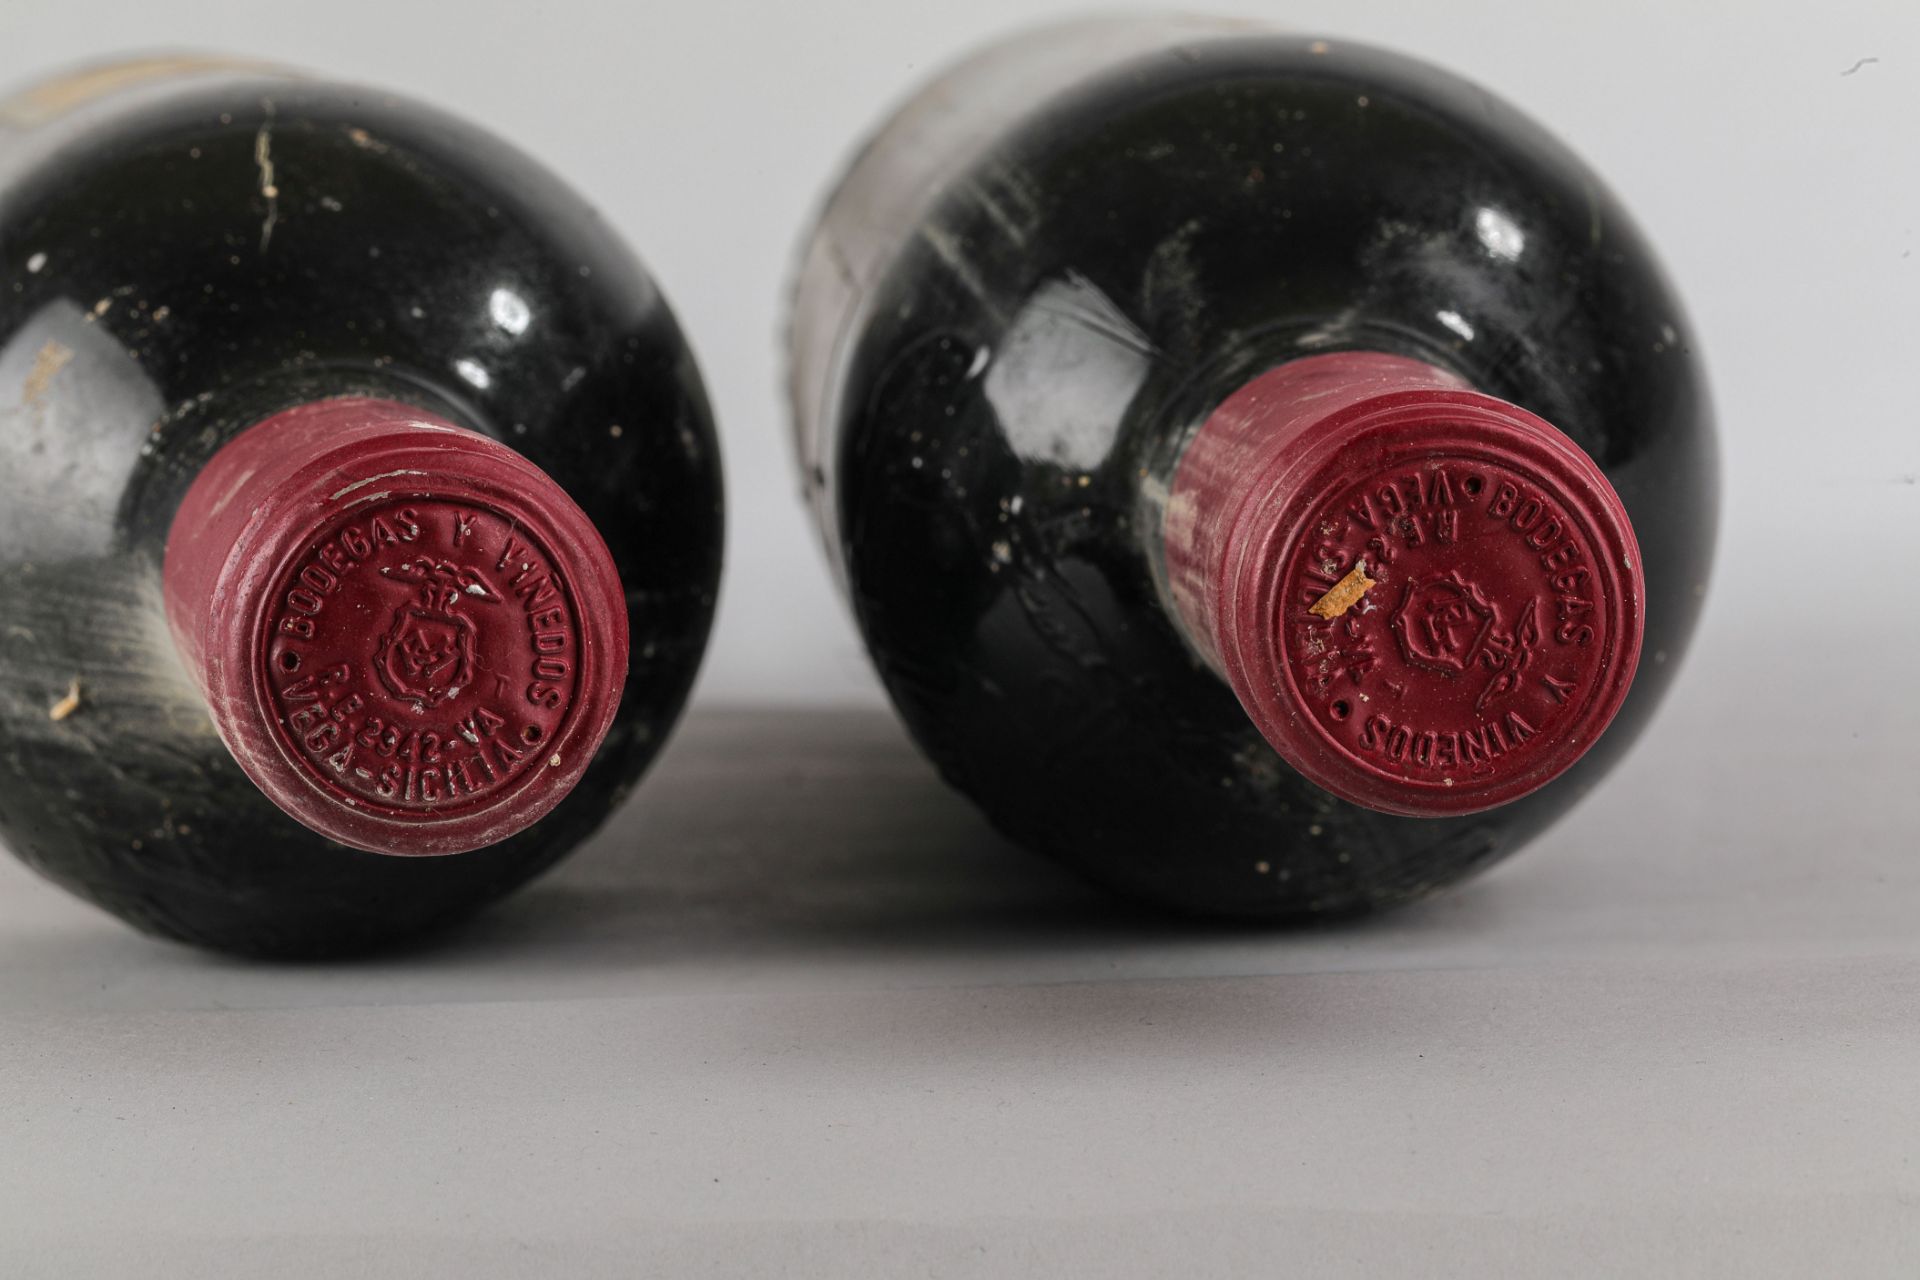 VEGA SICILIA UNICO. 1980. 2 bouteilles. Ribera del Duero. N°06860 et N°06864 sur production 38 480 - Image 5 of 6